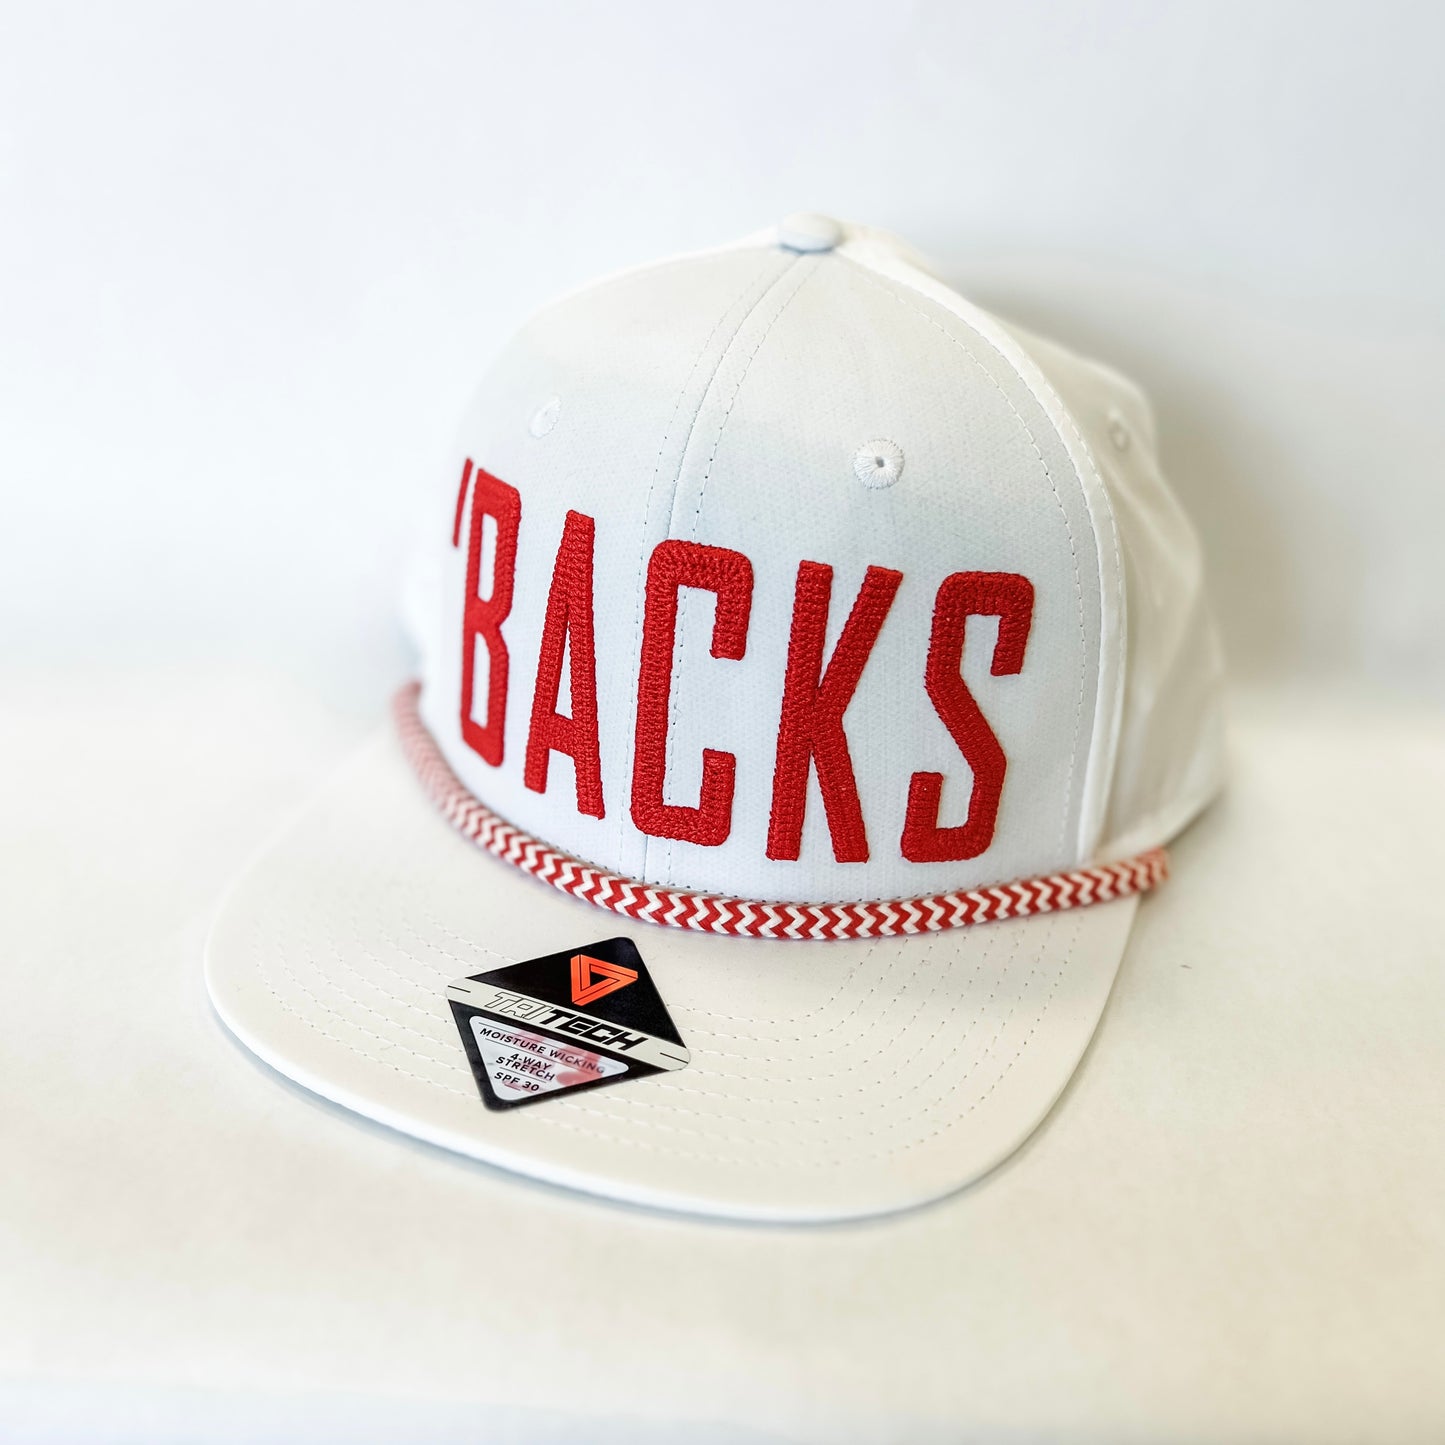 BACKS snapback rope hat – shopfoxytees